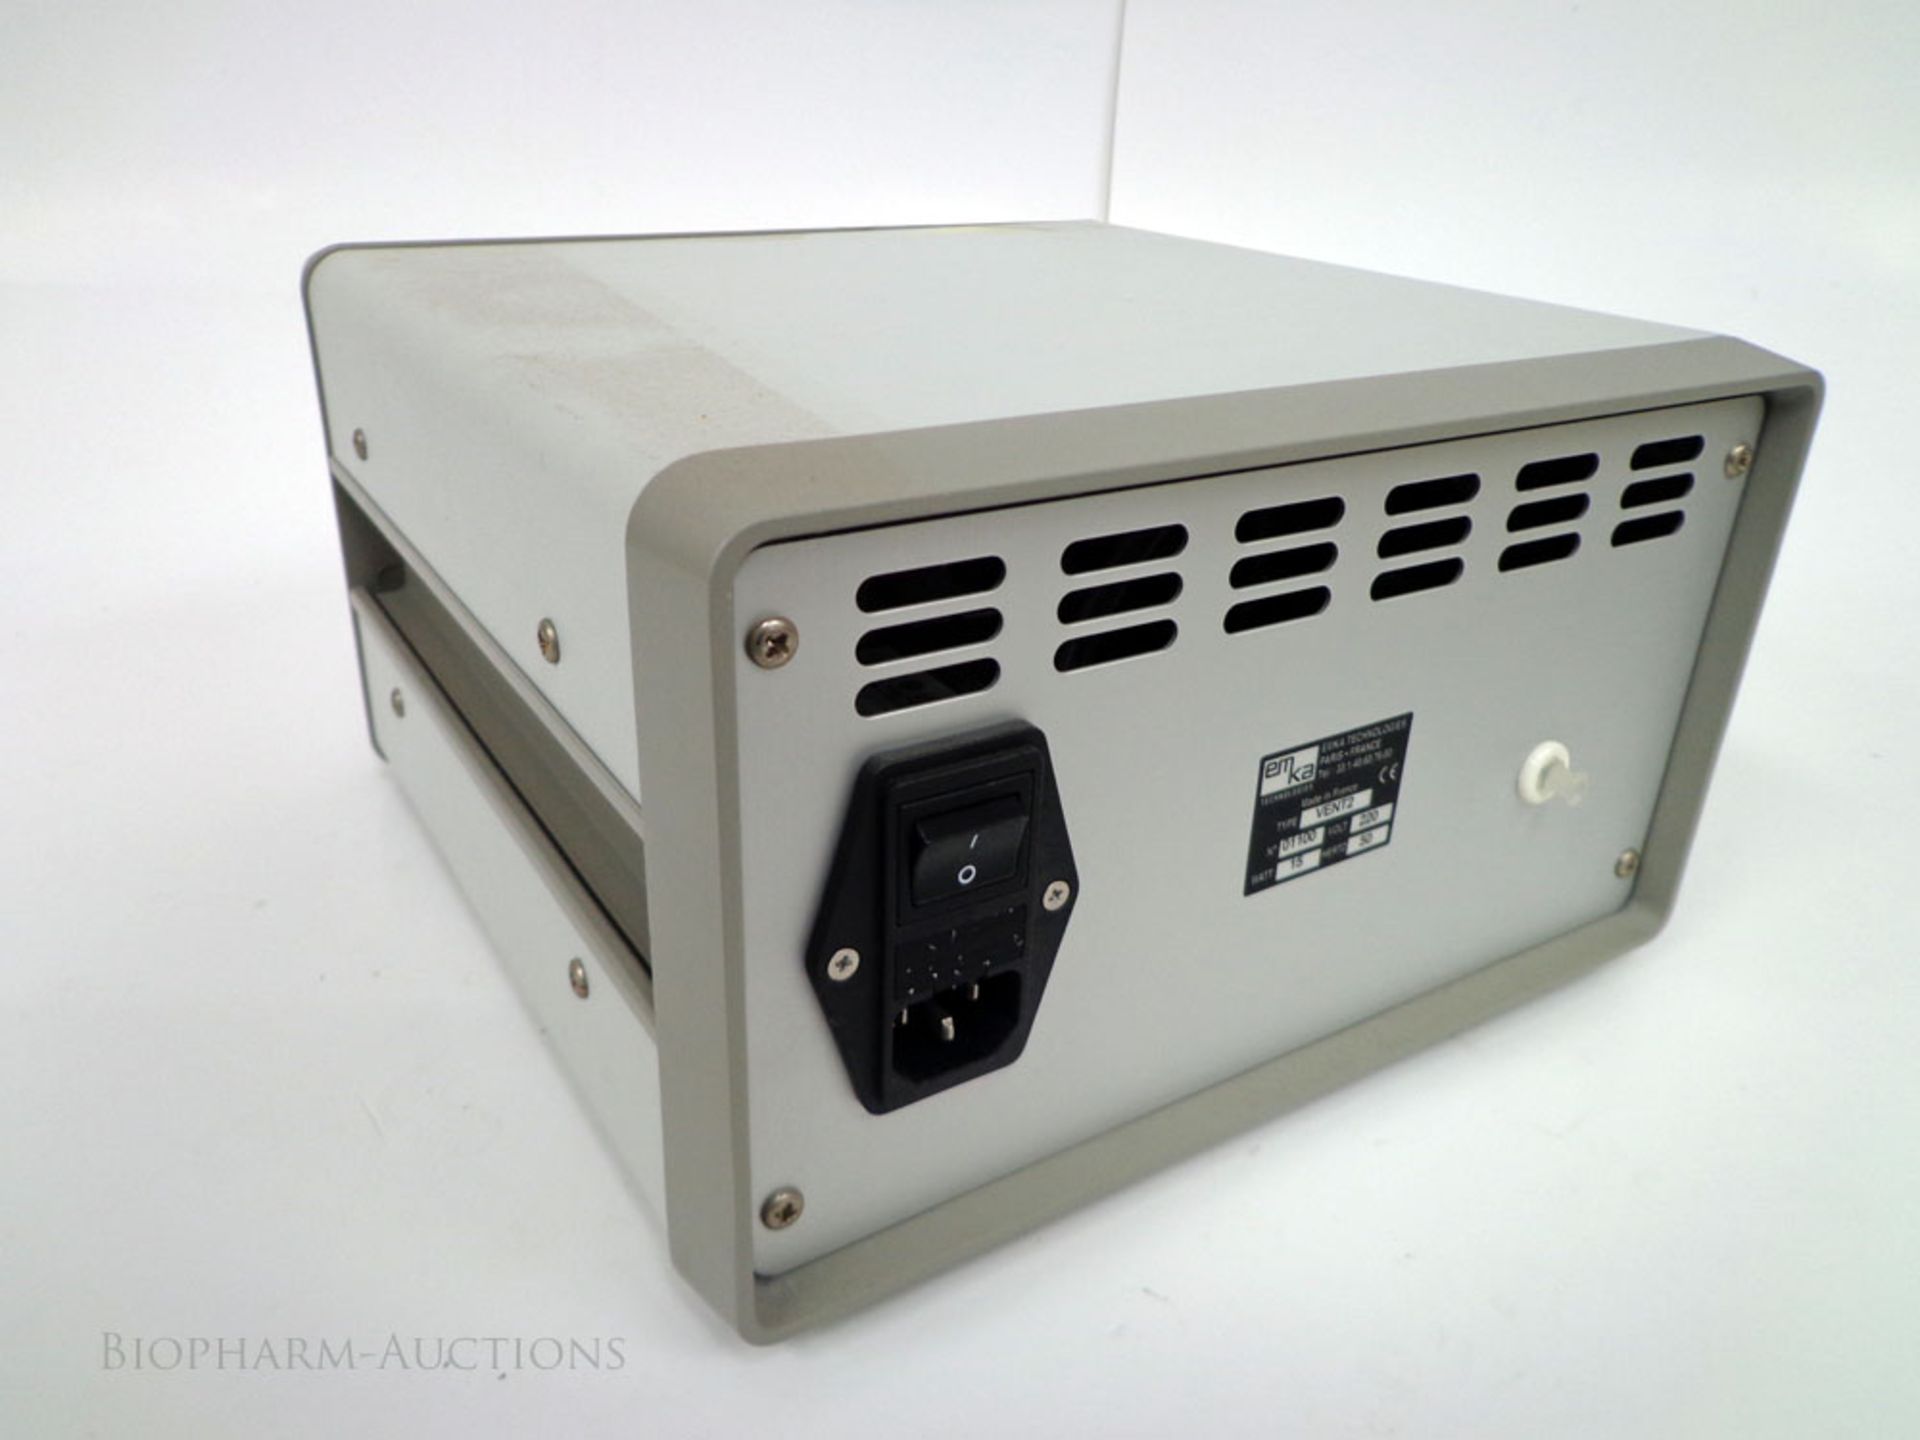 EMKA Vent 2 ventilator, serial number 1100 (Ref: WA11245) - Image 3 of 4